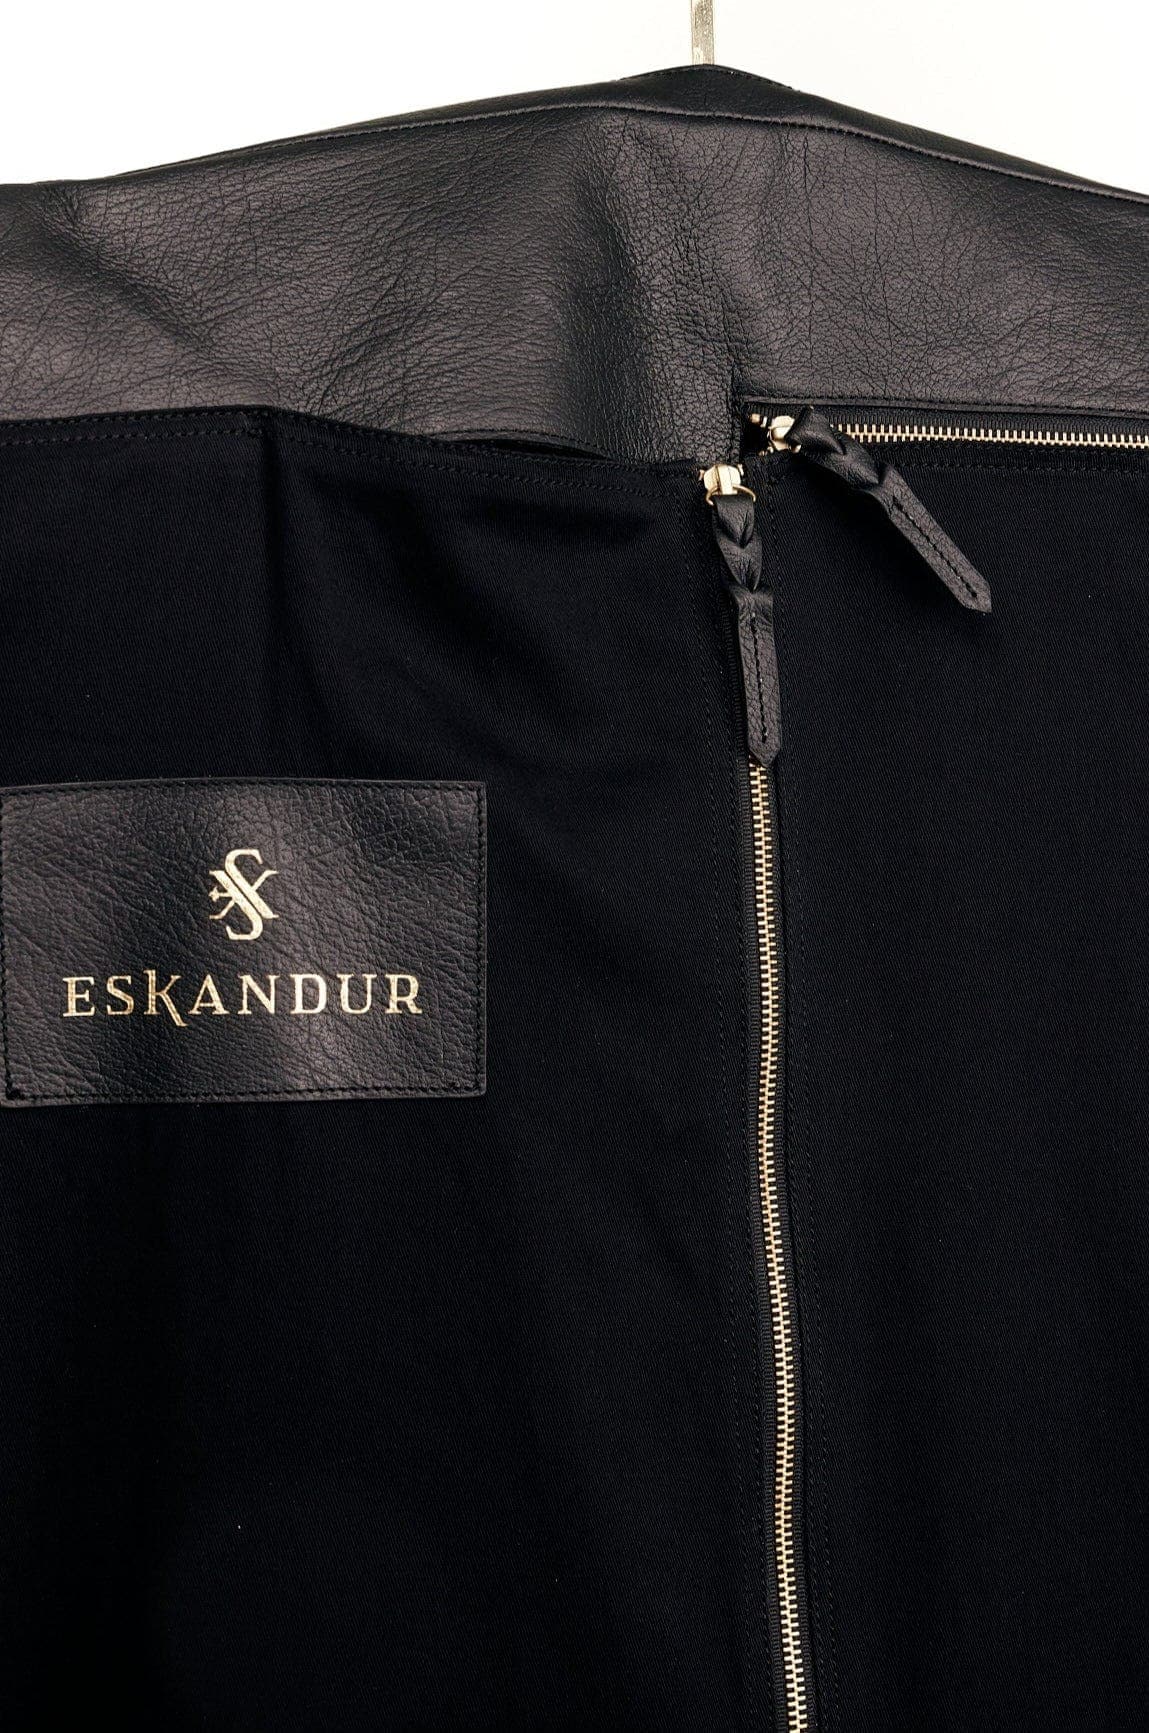 Eskandur luxury Leather Garment bag open with cotton interior and gold vertical zipper